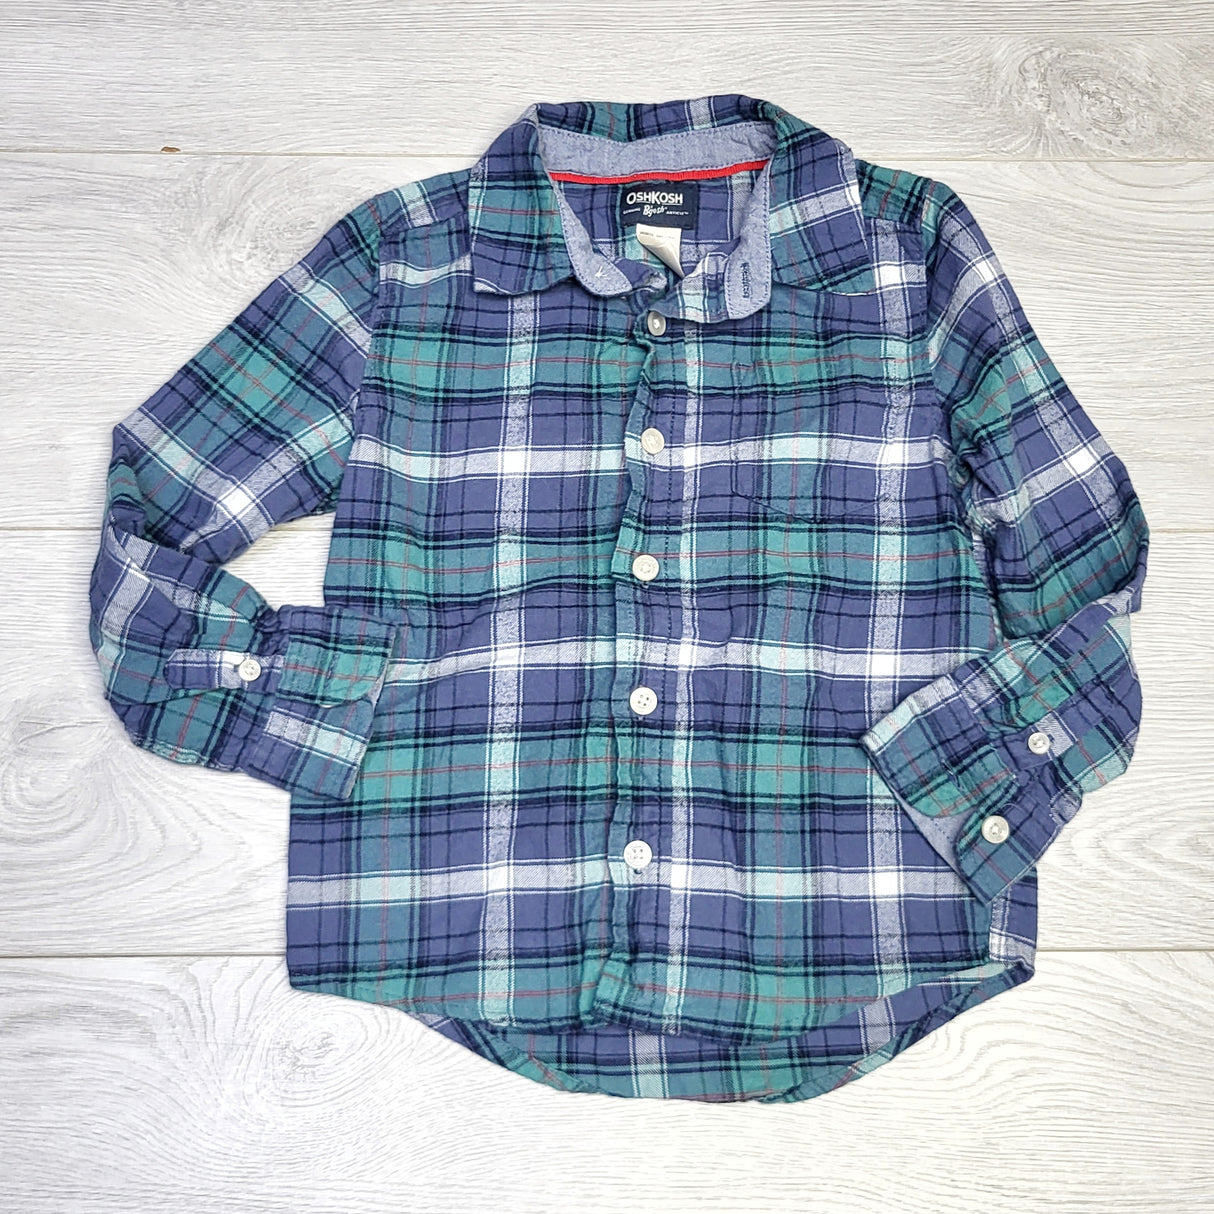 KJHN1 - Oshkosh blue and green plaid button down flannel shirt. Size 4T